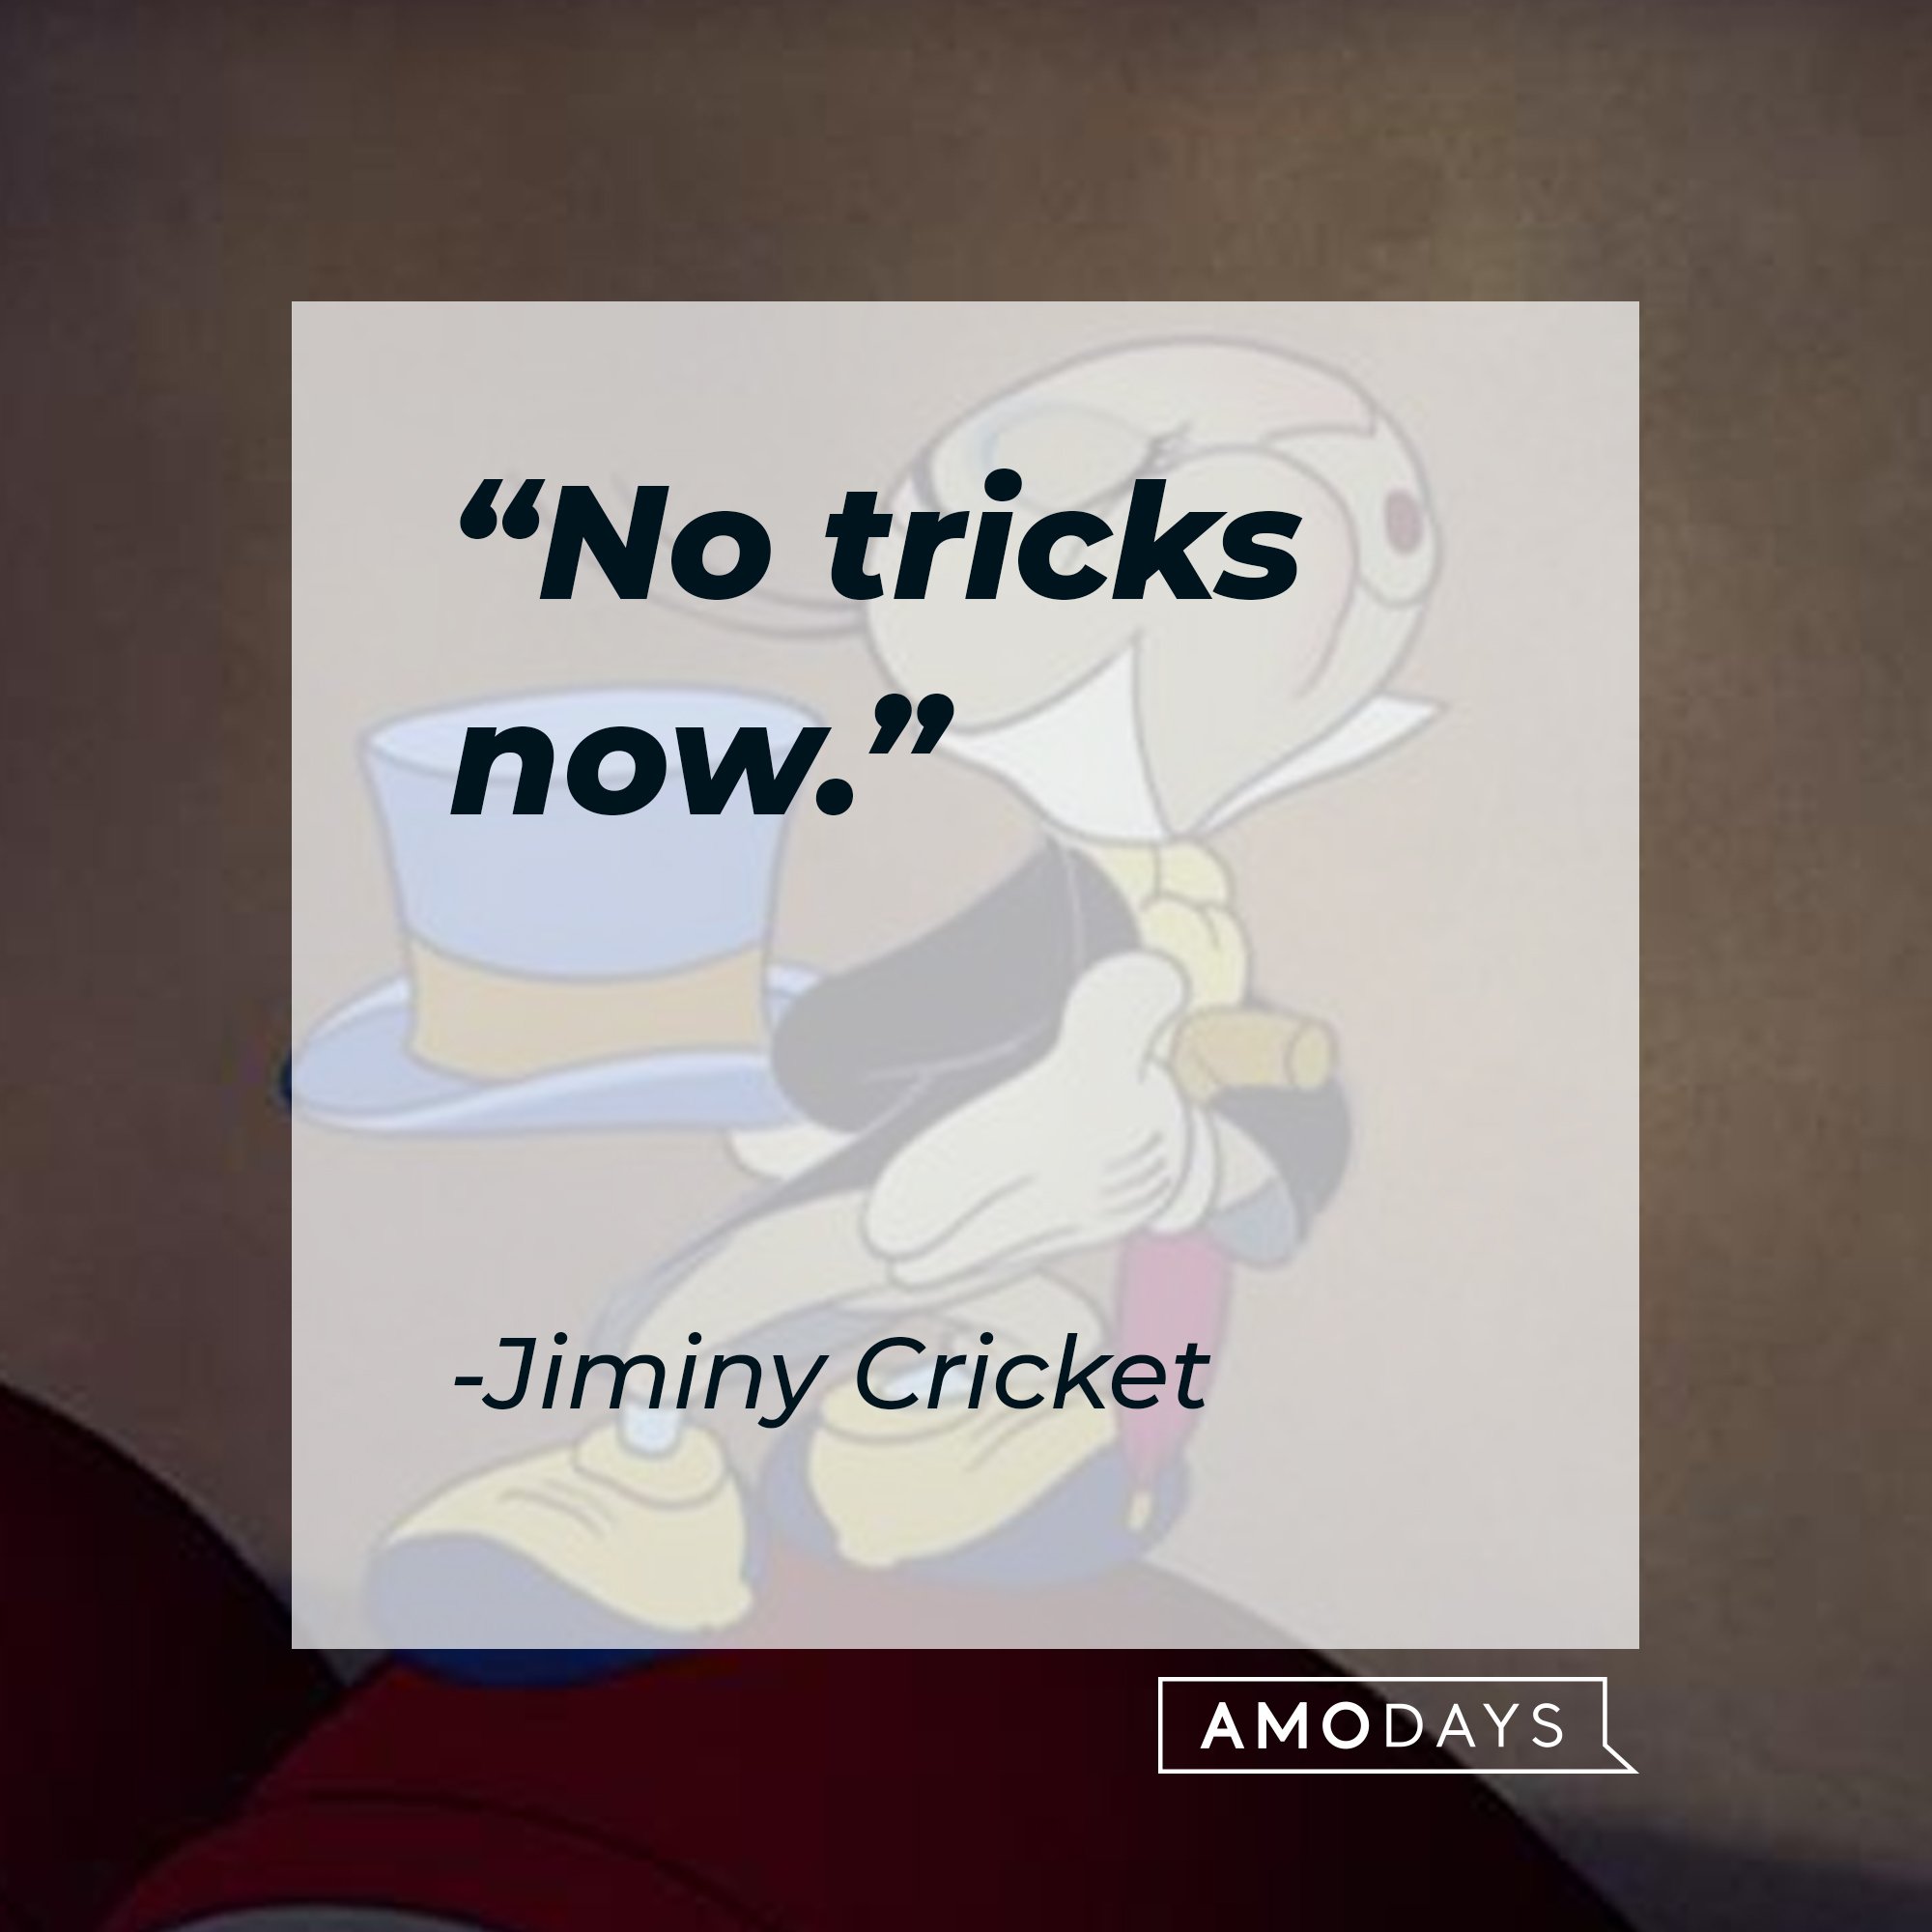  Jiminy Cricket's quote: “No tricks now.”| Image: AmoDays